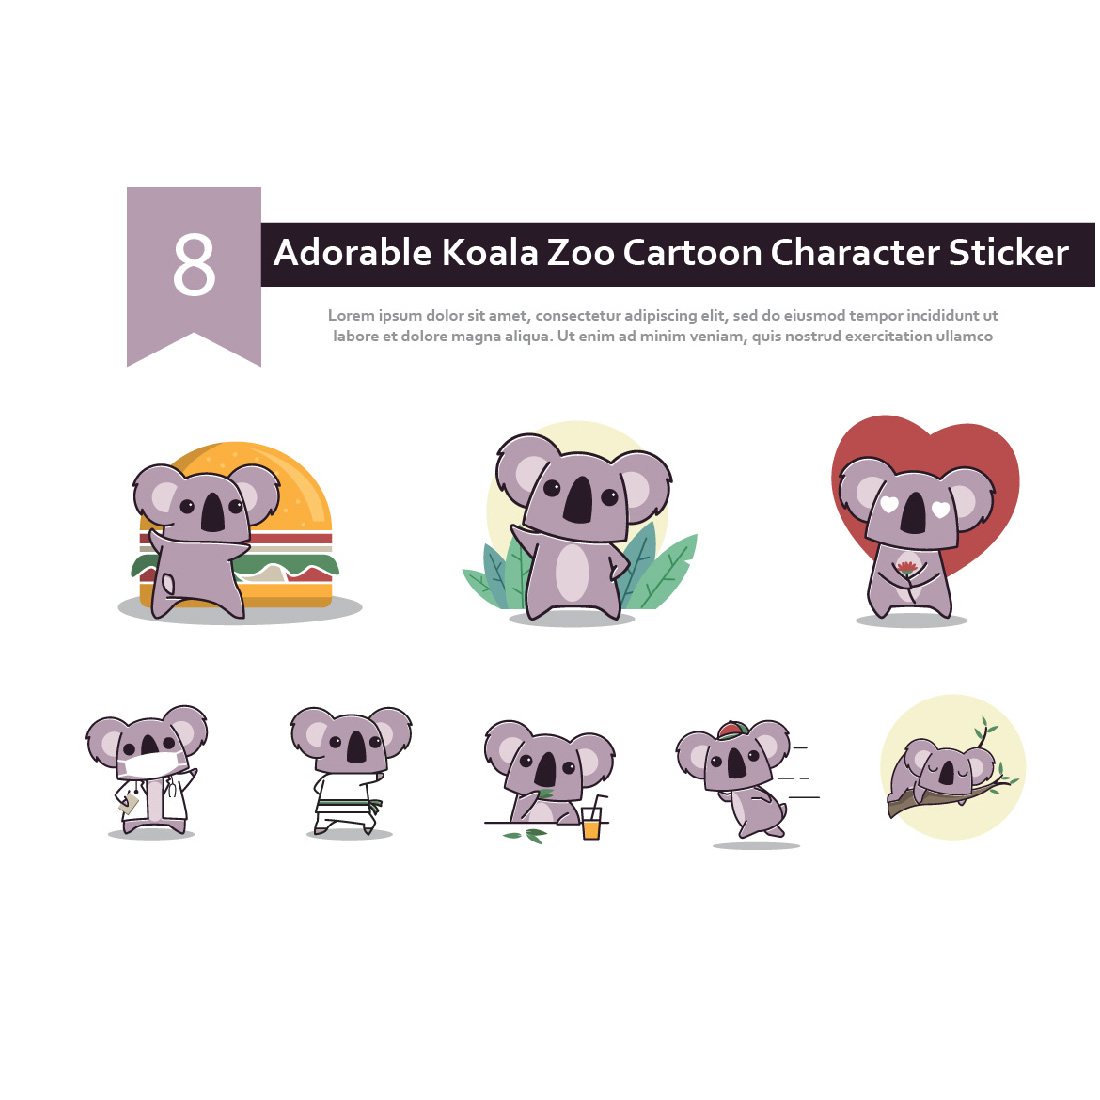 8 Adorable Koala Zoo Cartoon Character Sticker cover image.